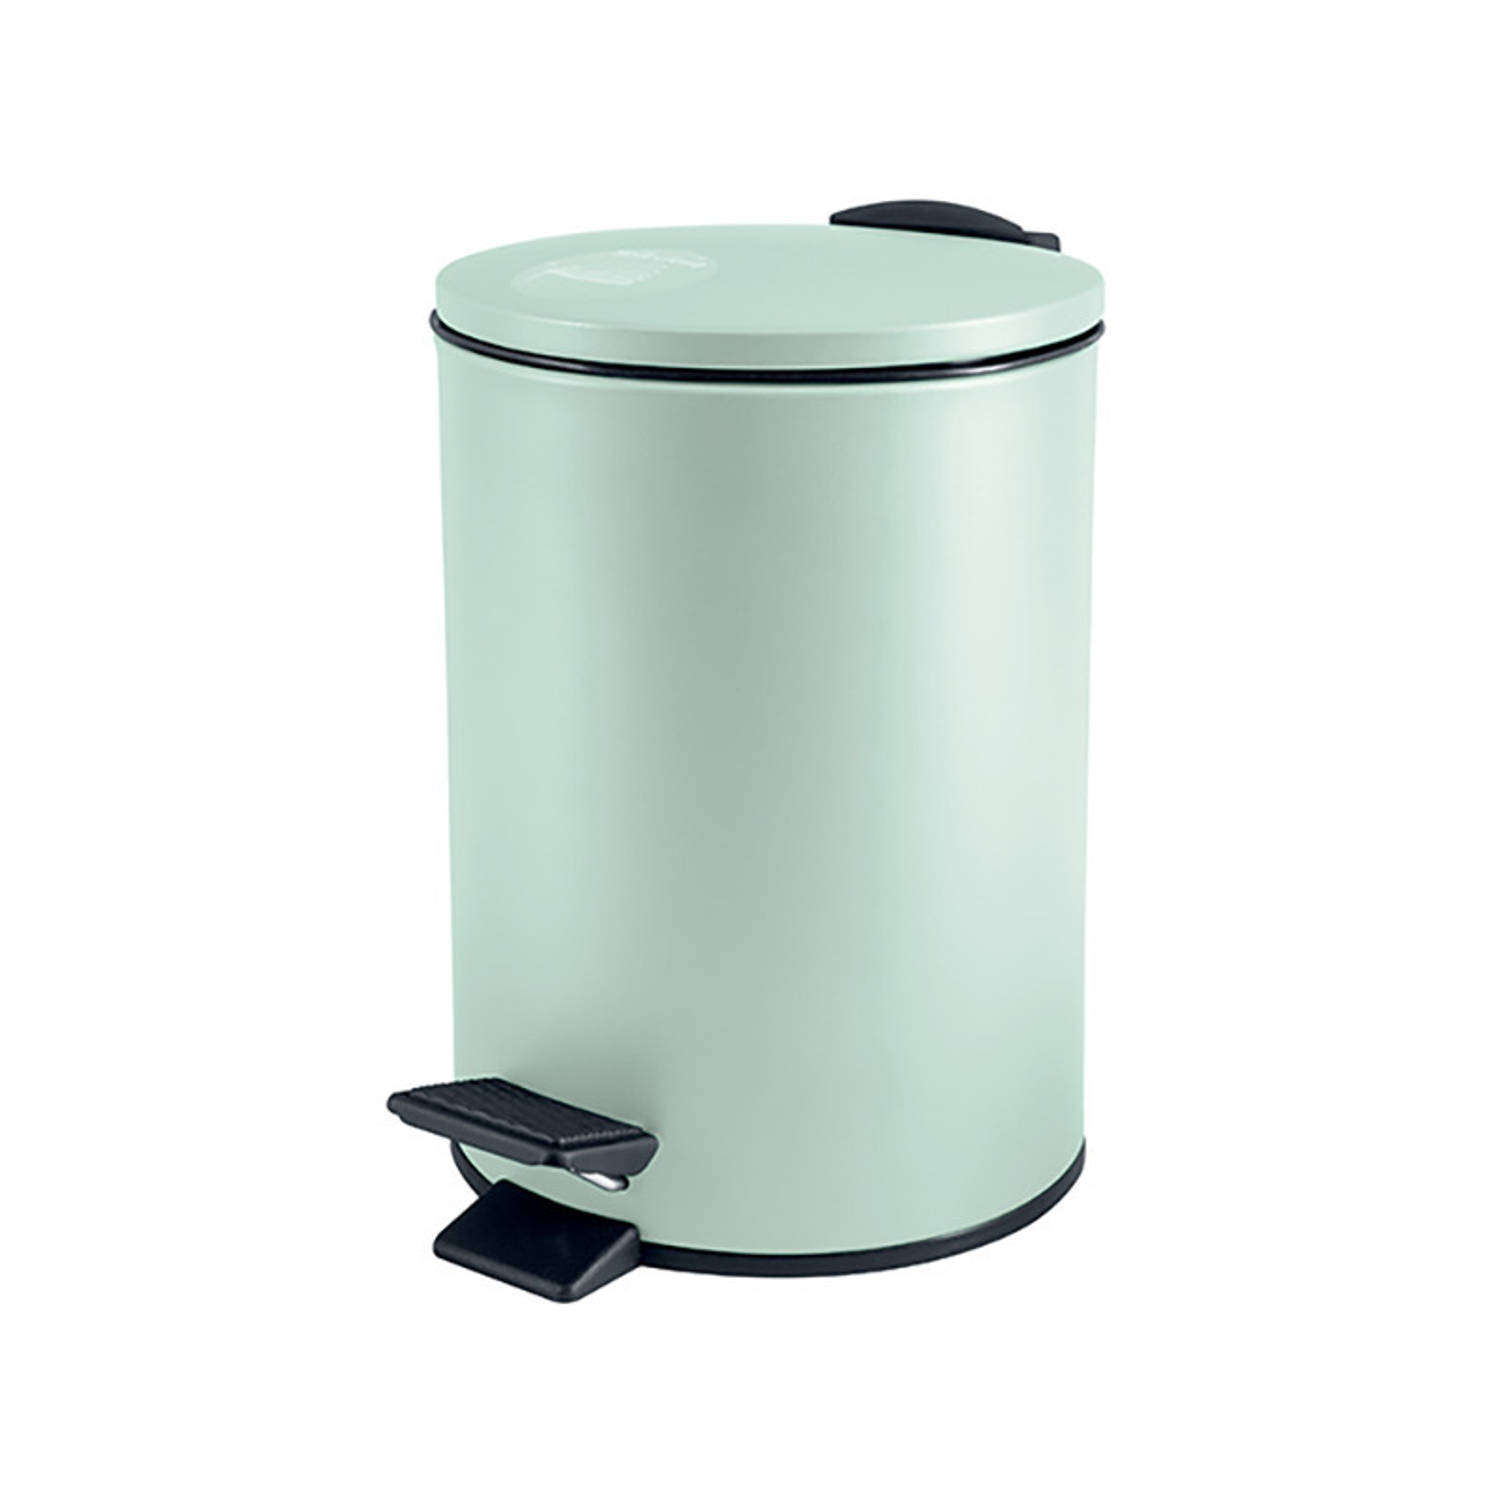 Spirella Pedaalemmer Cannes - mintgroen - 5 liter - metaal - L20 x H27 cm - soft-close - toilet/badkamer